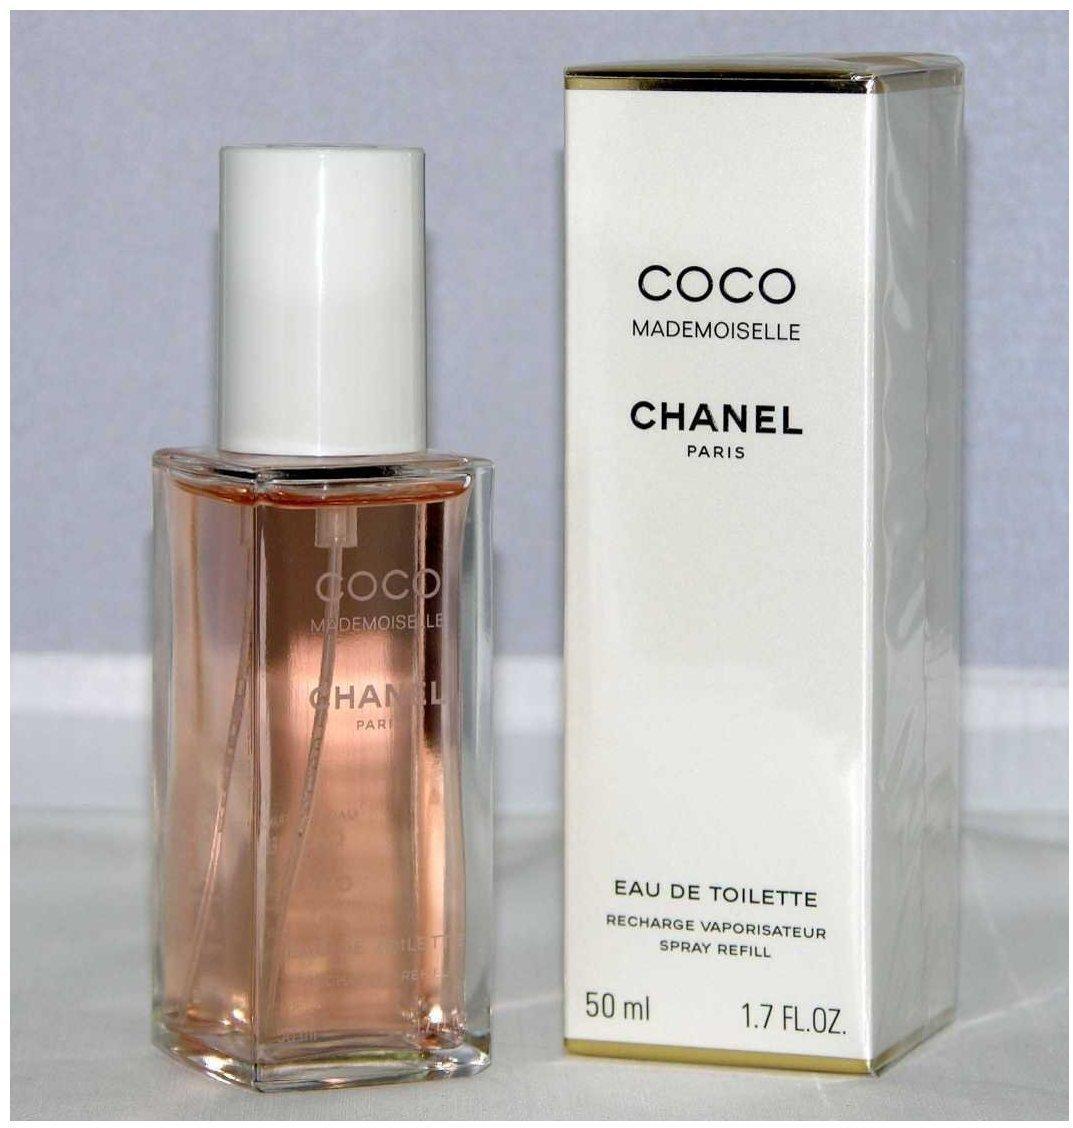 Chanel Coco Mademoiselle Eau de Toilette Nachfüllung (50ml